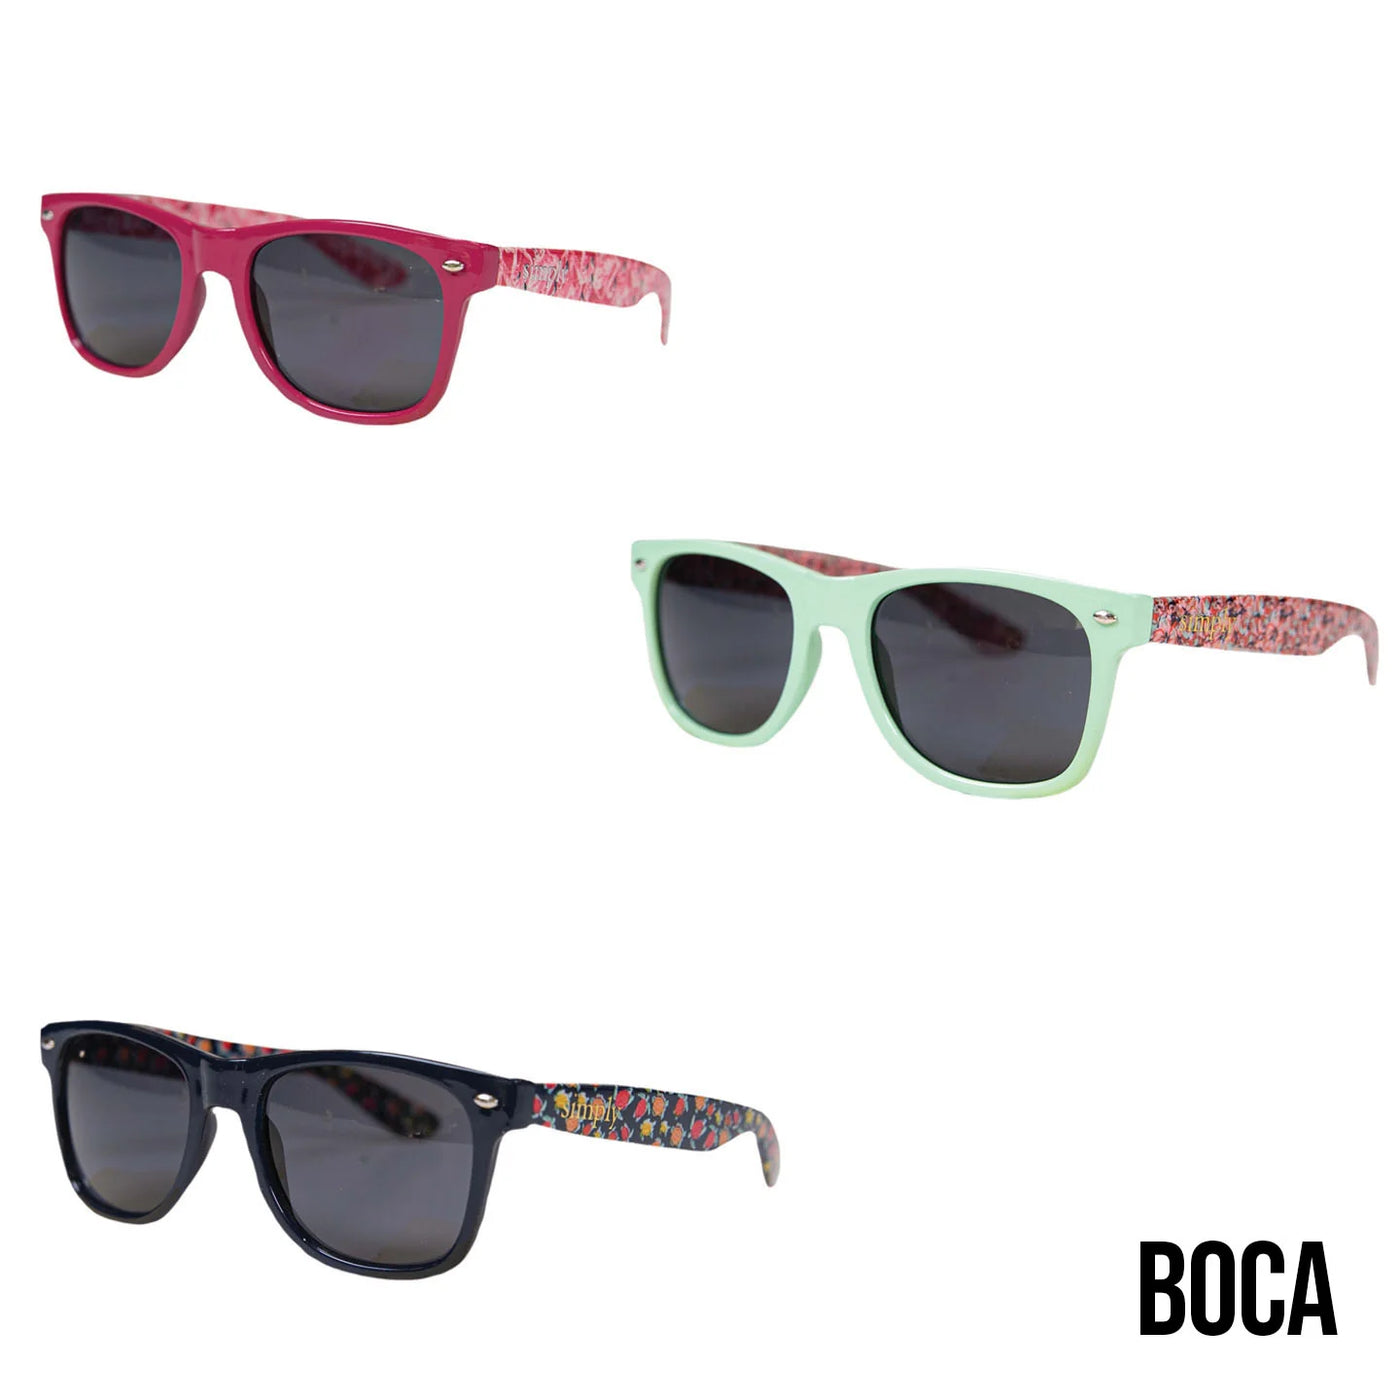 Simply Southern Boca Sunglasses